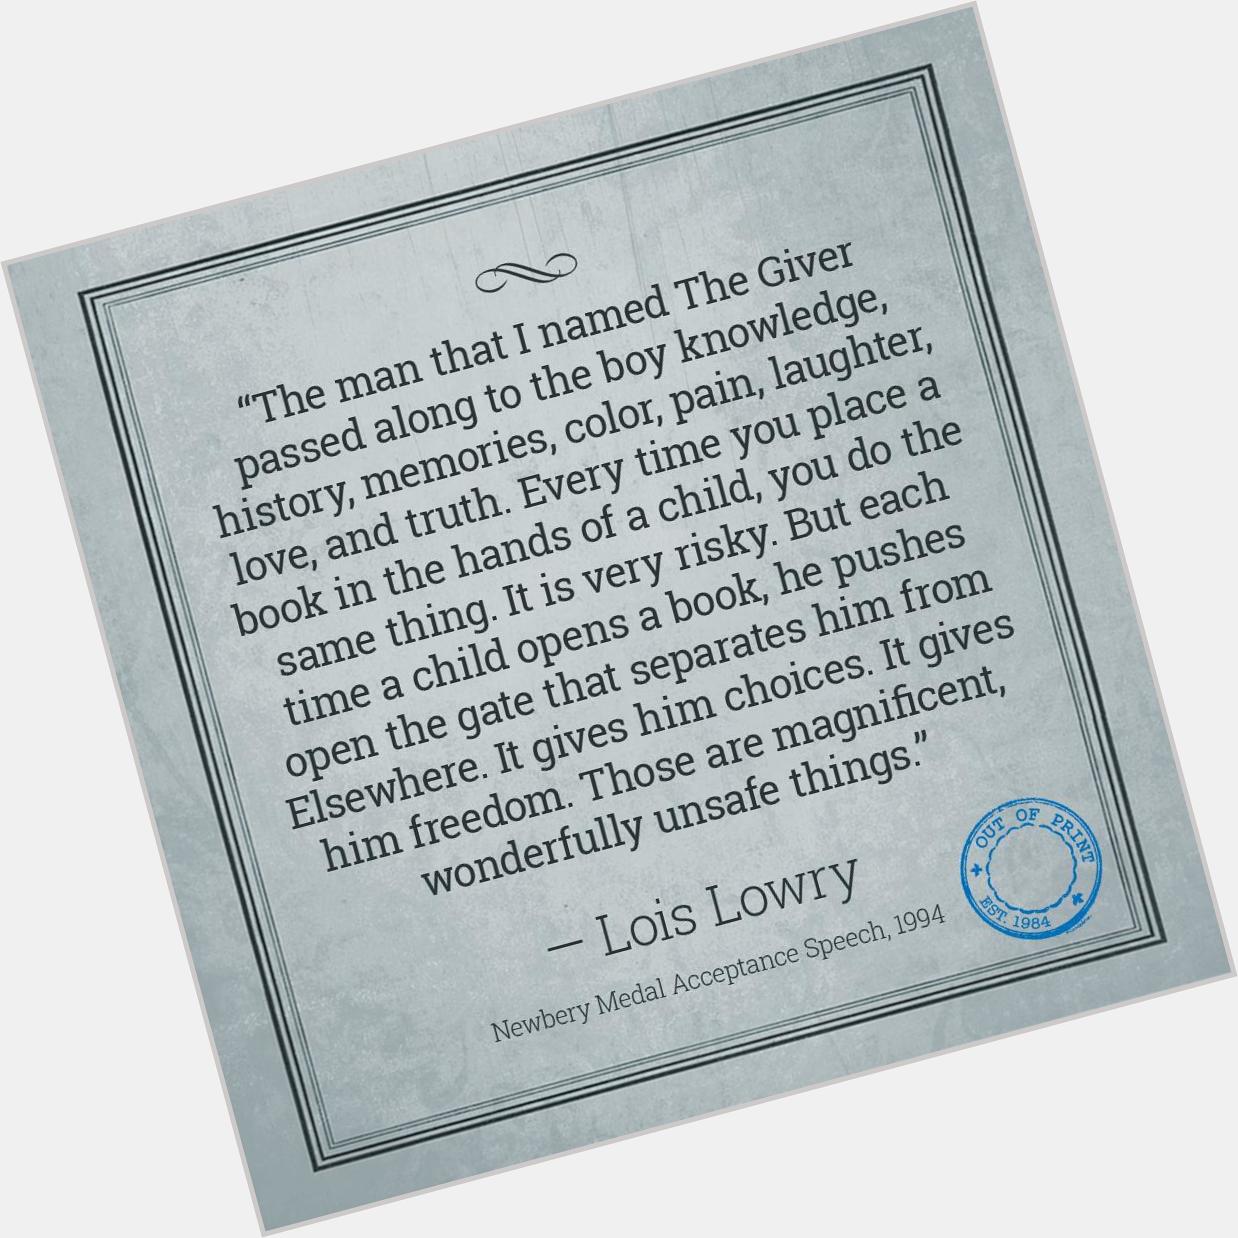 Happy Birthday, Lois Lowry! 